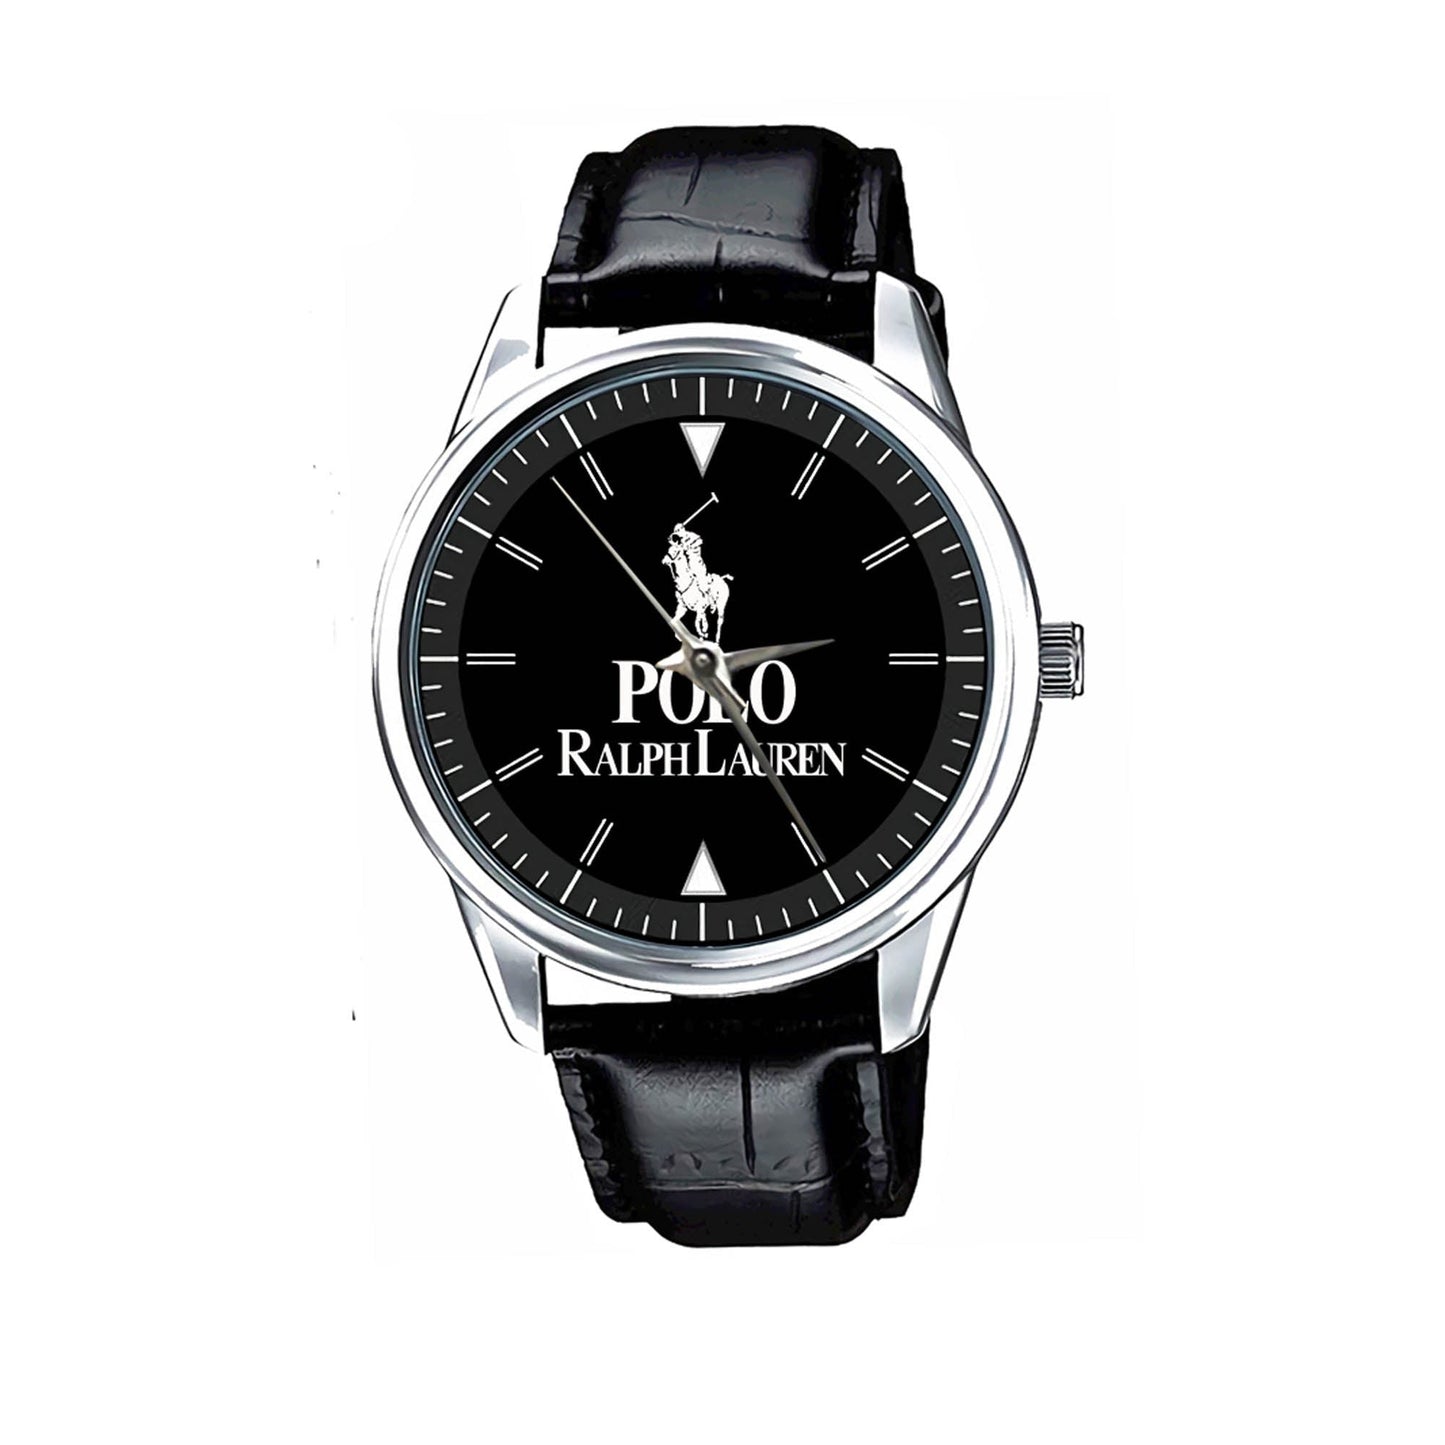 Polo Ralph Lauren Watches KP653